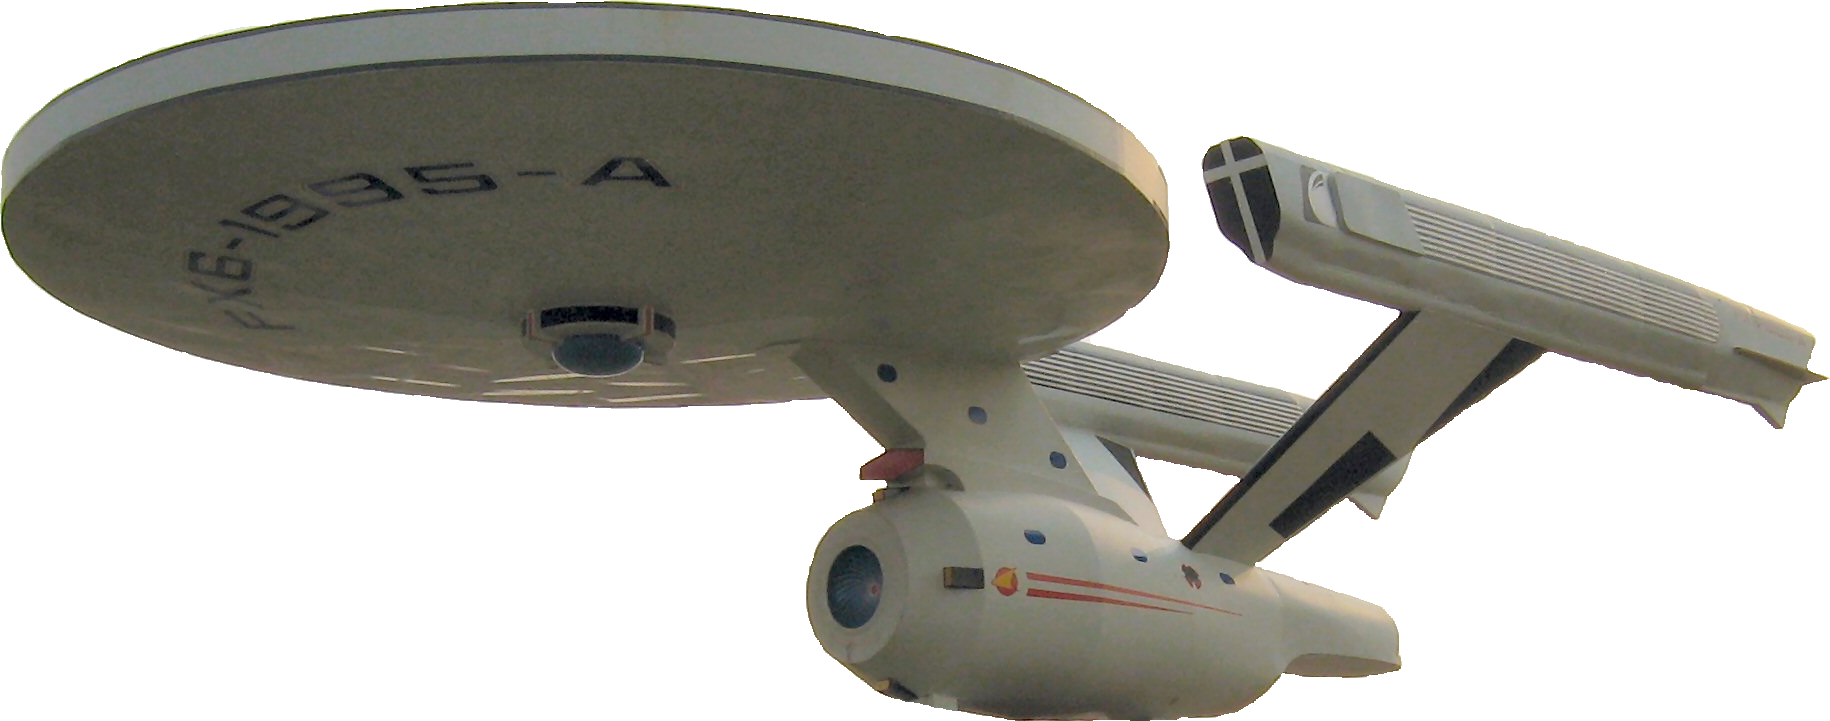 U.S.S. Enterprise 1701-E